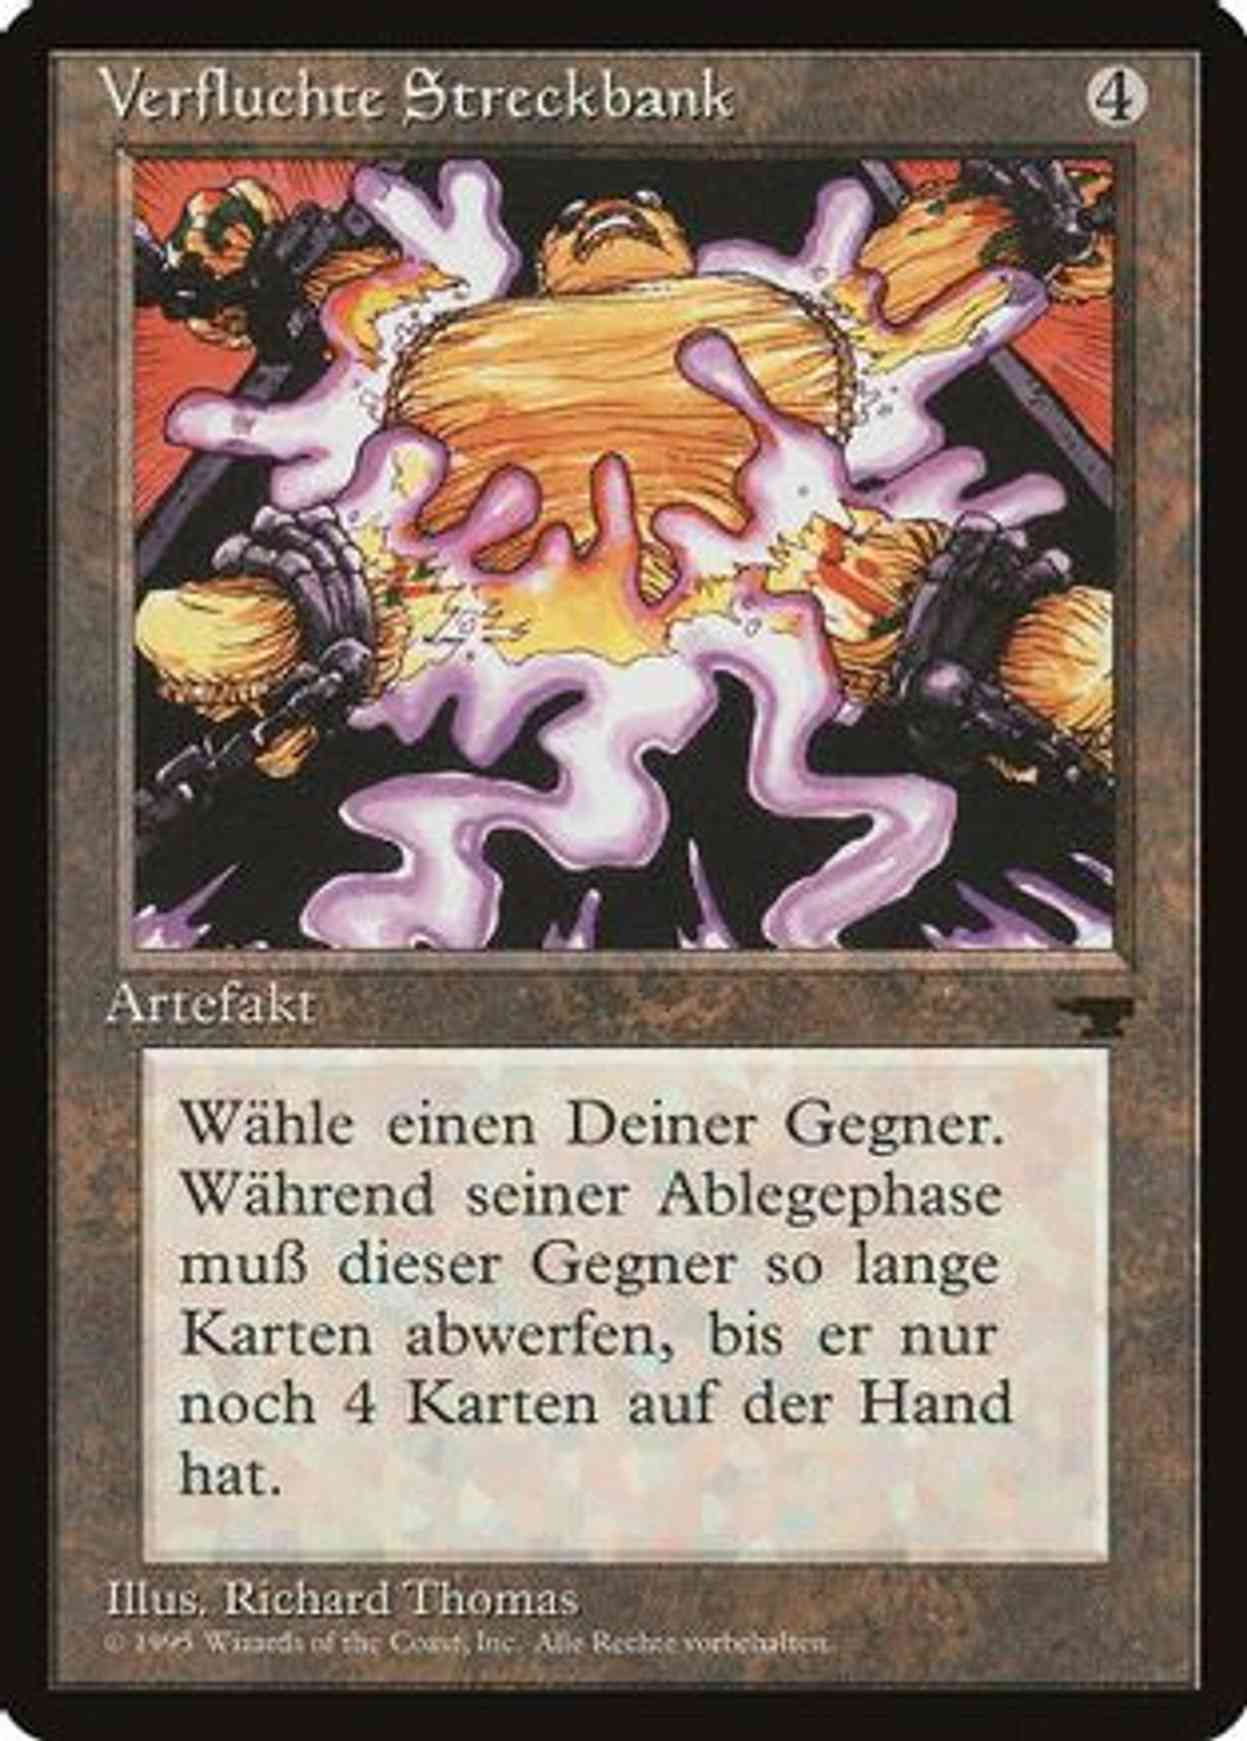 Cursed Rack (German) - "Verfluchte Streckbank" magic card front